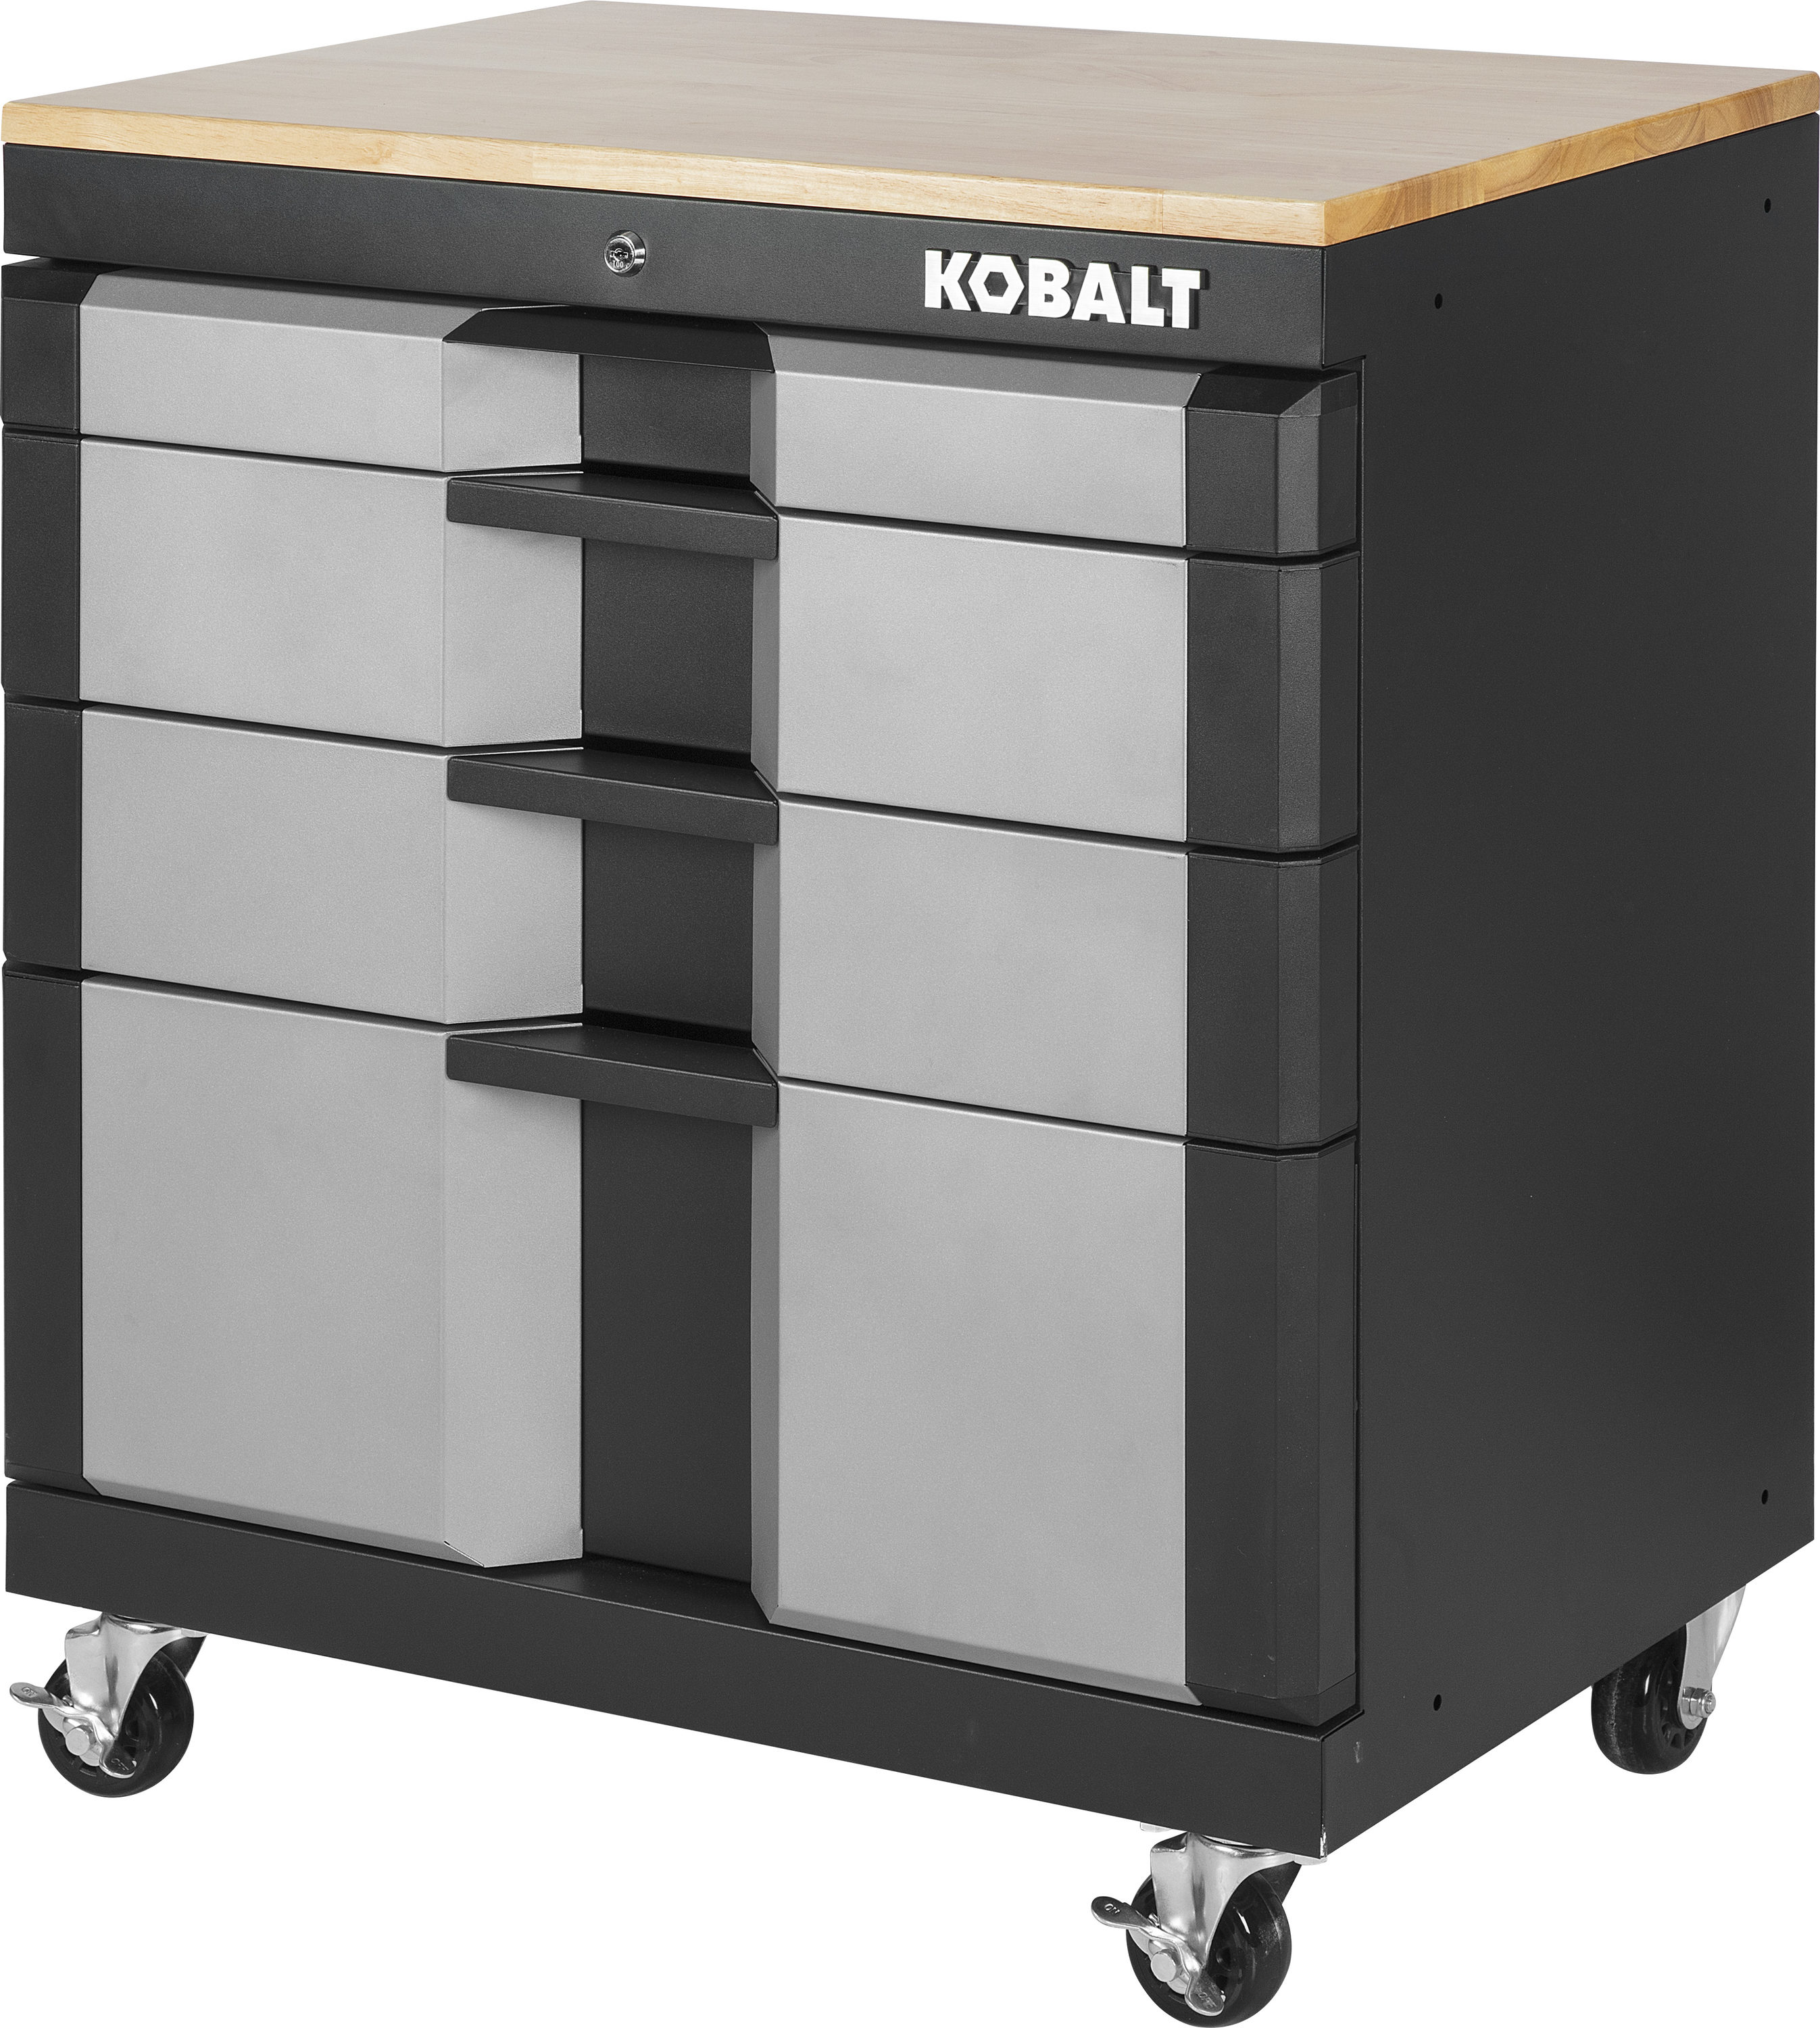 Kobalt Steel Freestanding Garage